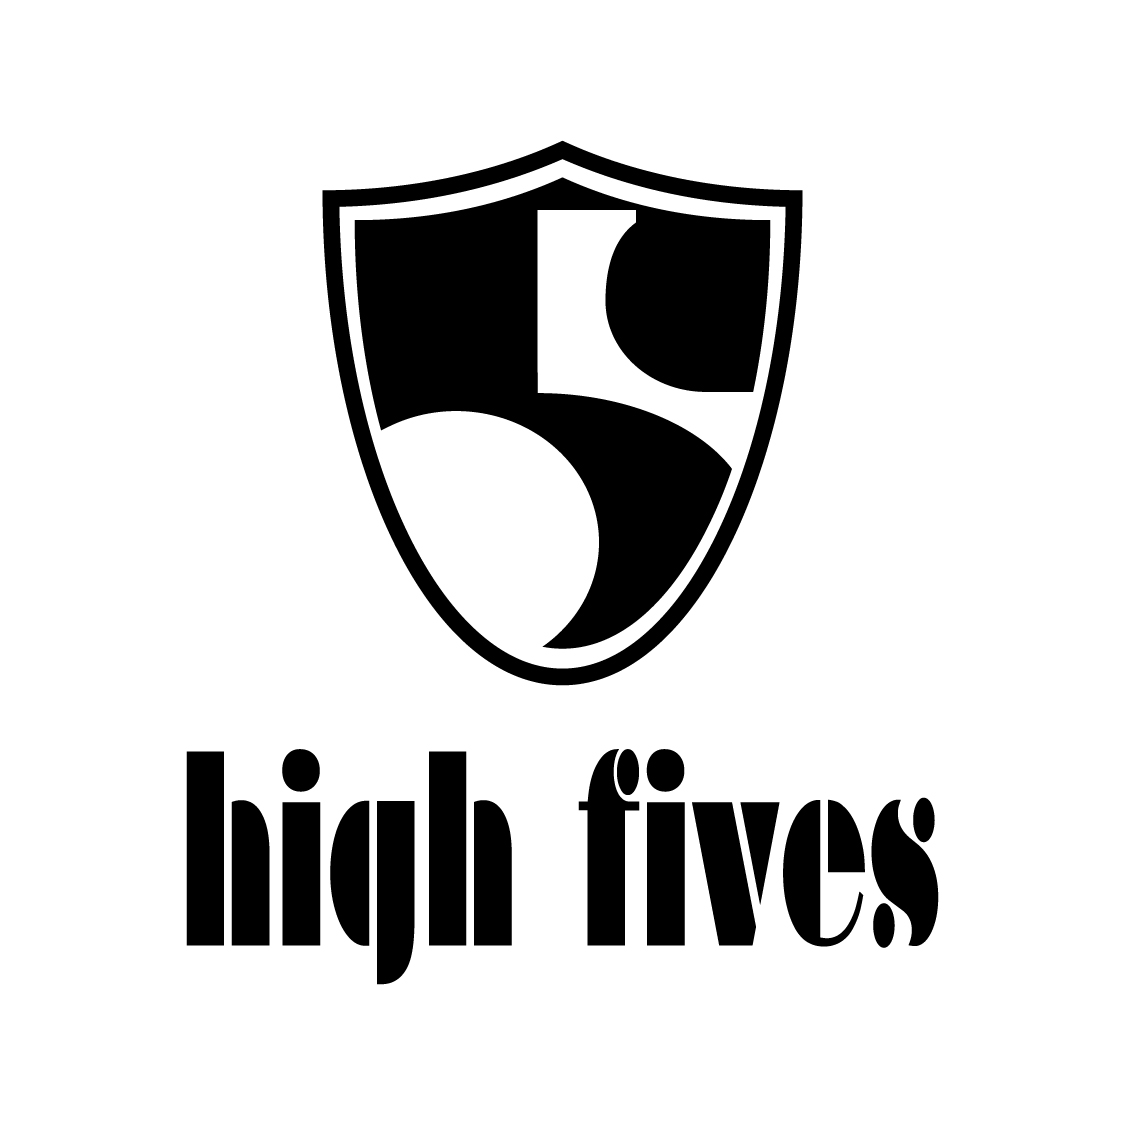 20111110_high_fives_logo - Mountain Town Magazine